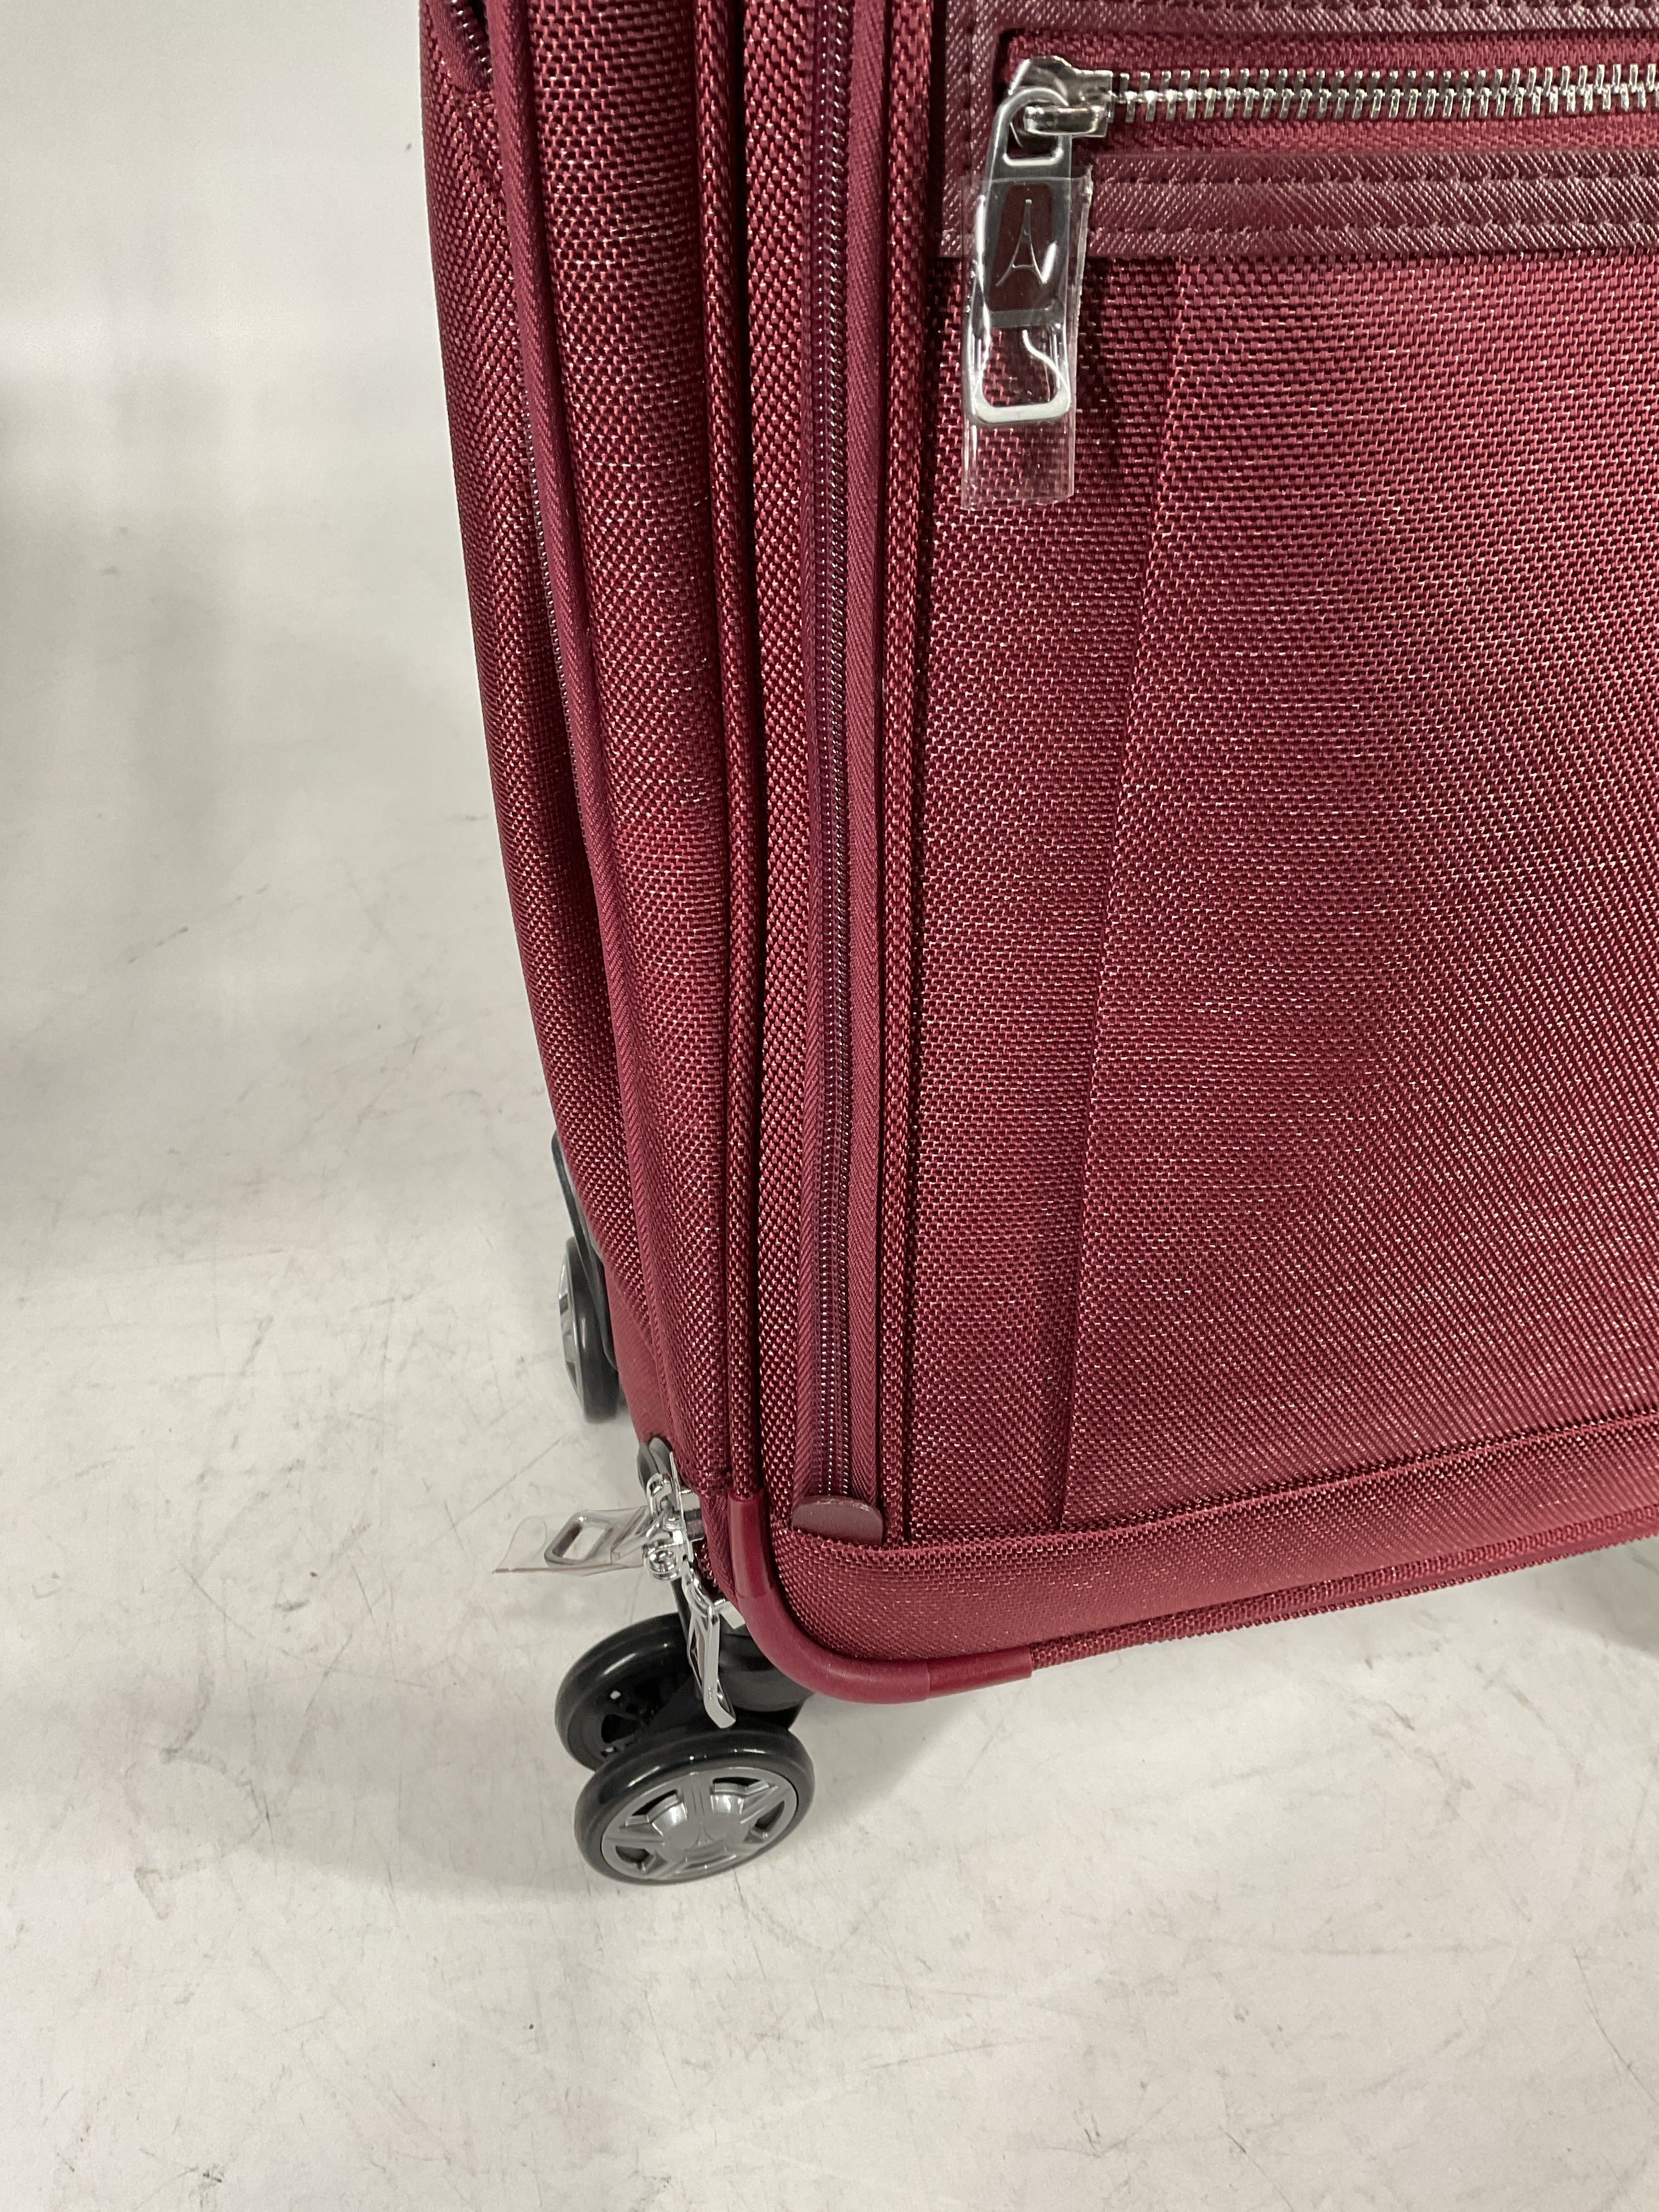 Travelpro Platinum Elite Softside Expandable Luggage, 8 Wheel Spinner Suitcase, USB Port, Suiter, Men and Women U1